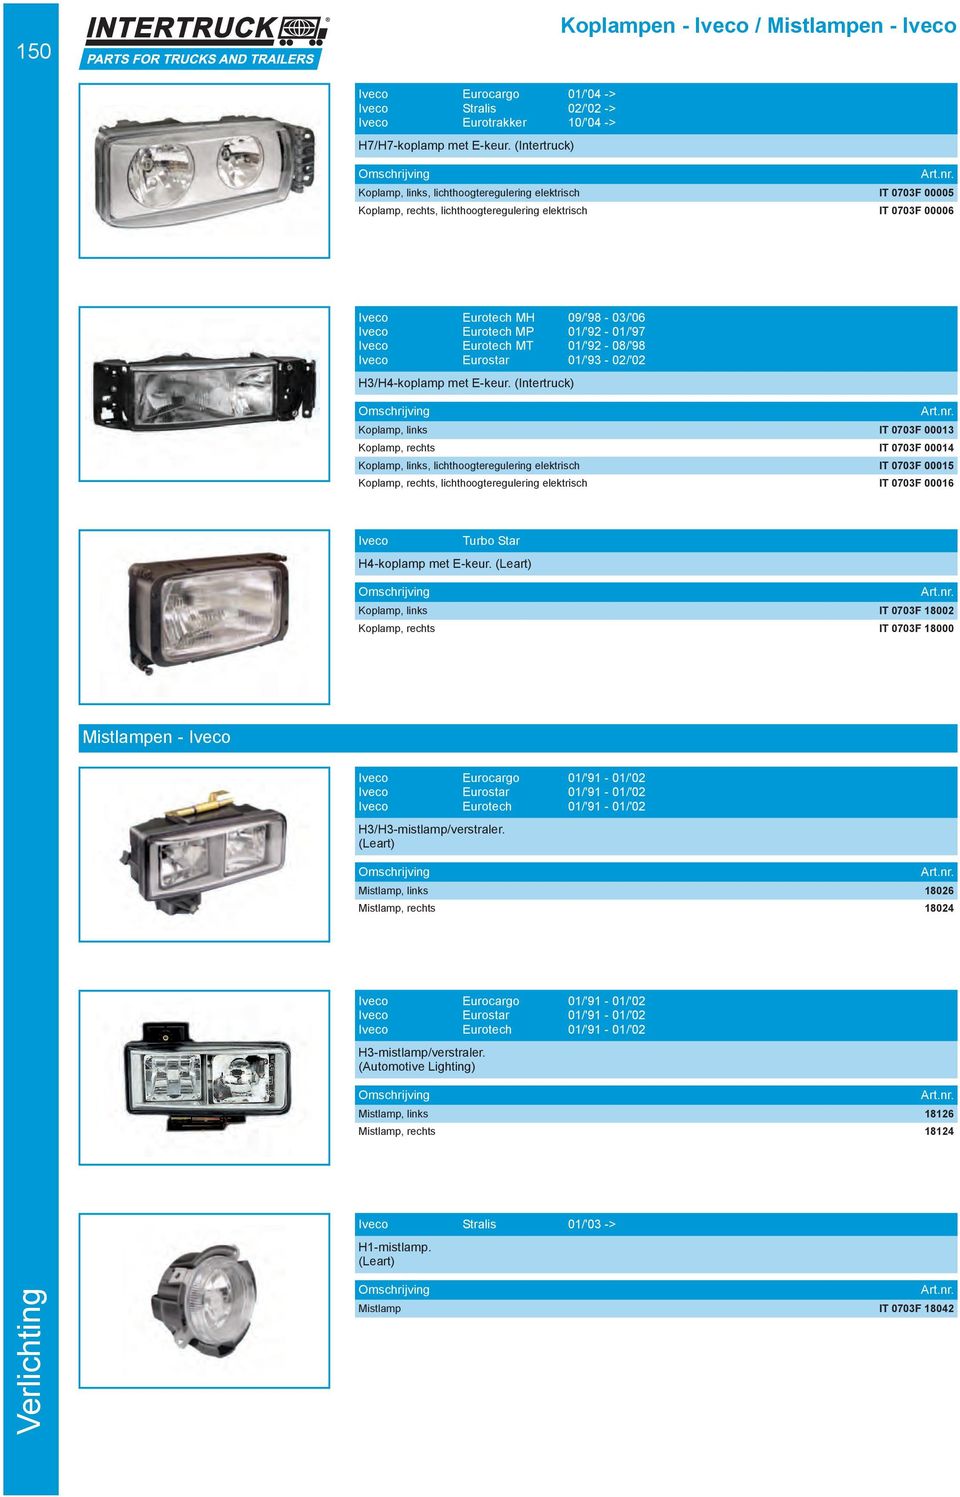 01/'92-01/'97 Iveco Eurotech MT 01/'92-08/'98 Iveco Eurostar 01/'93-02/'02 H3/H4-koplamp met E-keur.